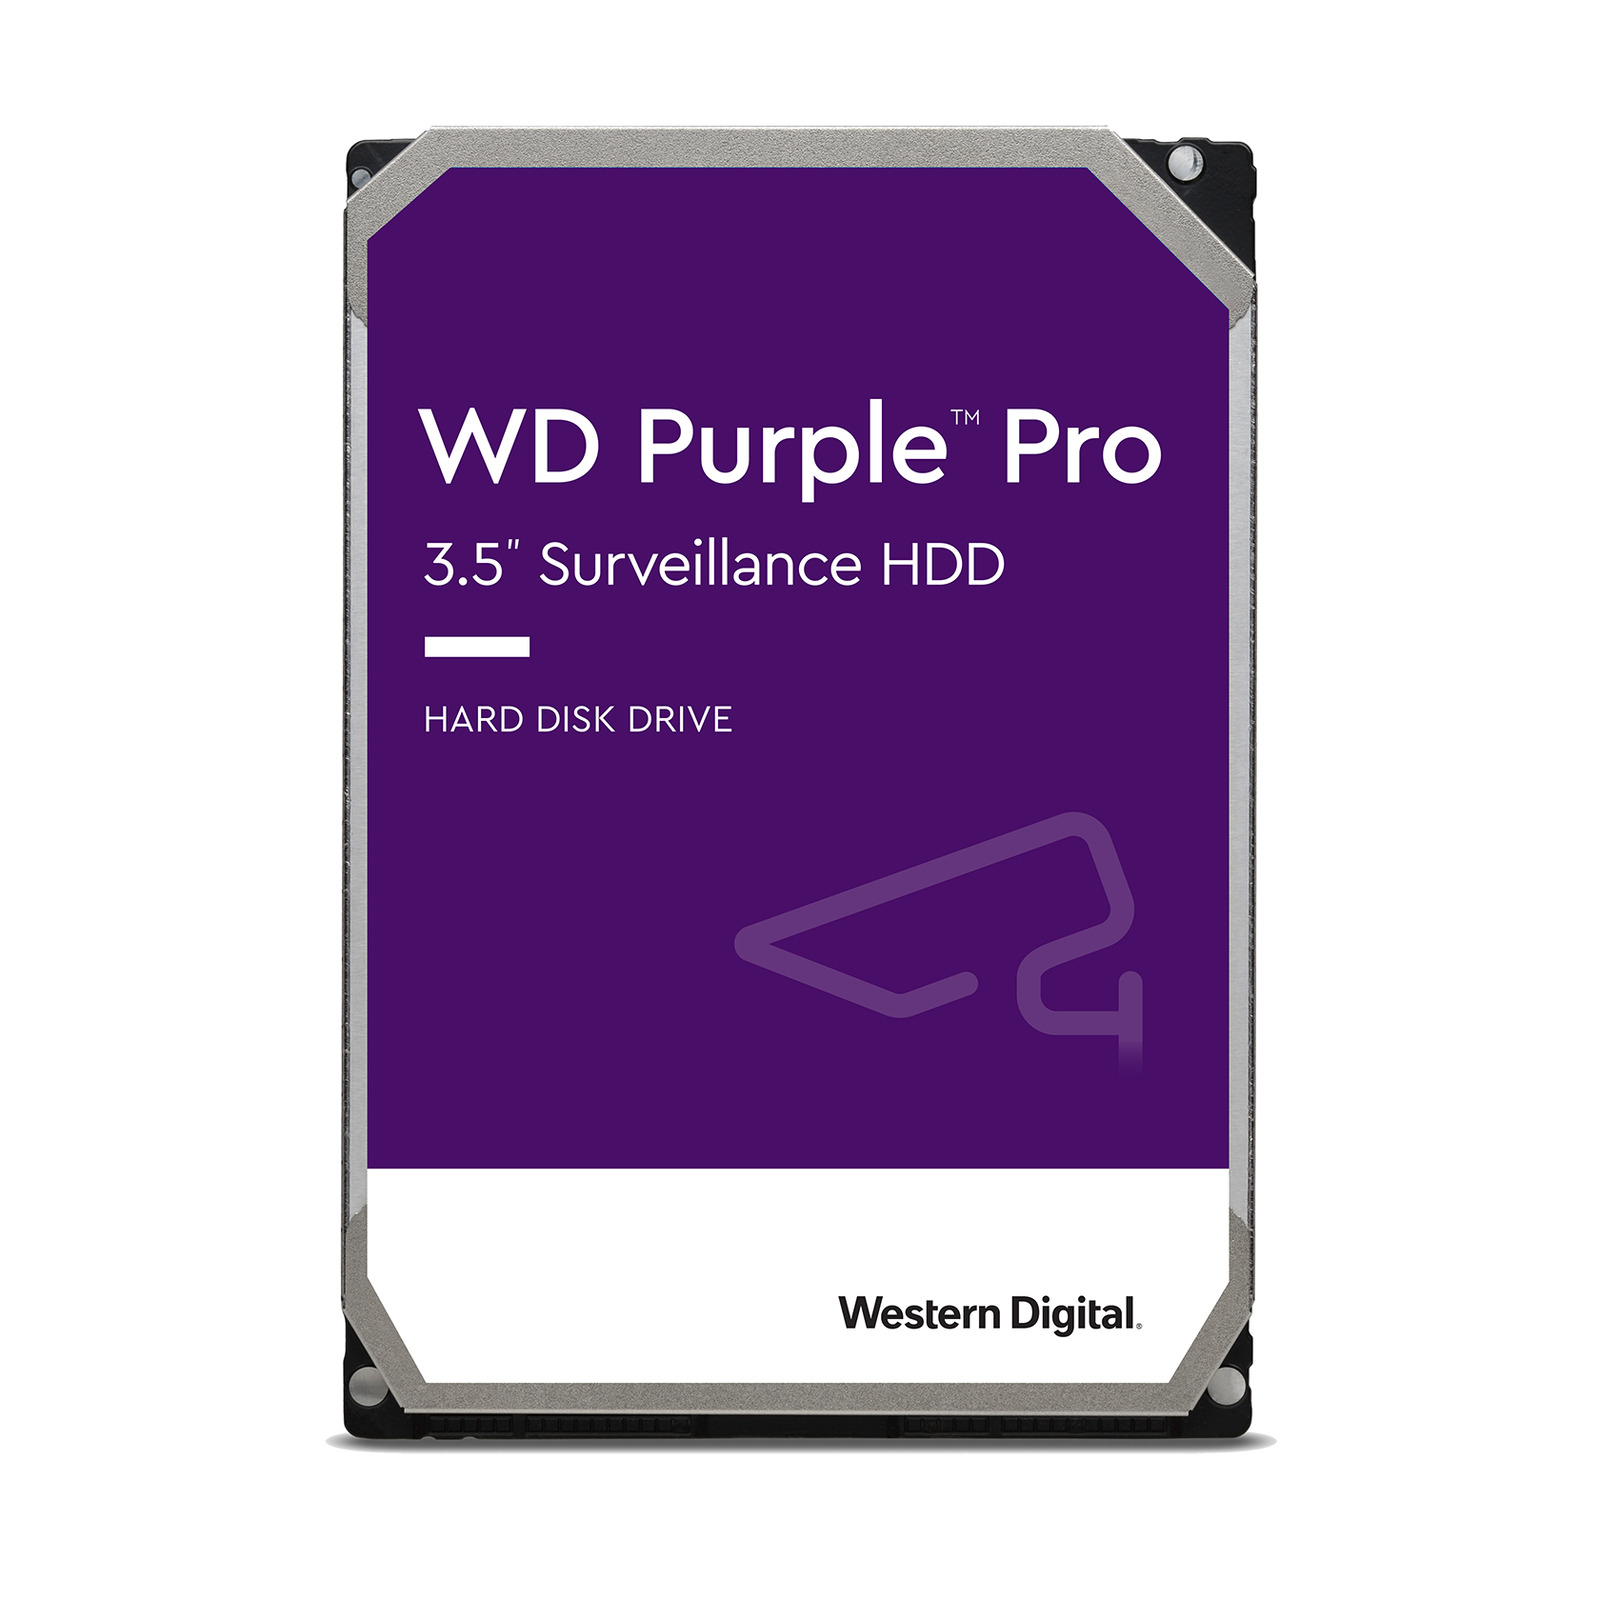 Western Digital 12TB WD Purple Pro Smart Video Internal Hard Drive - WD121PURP